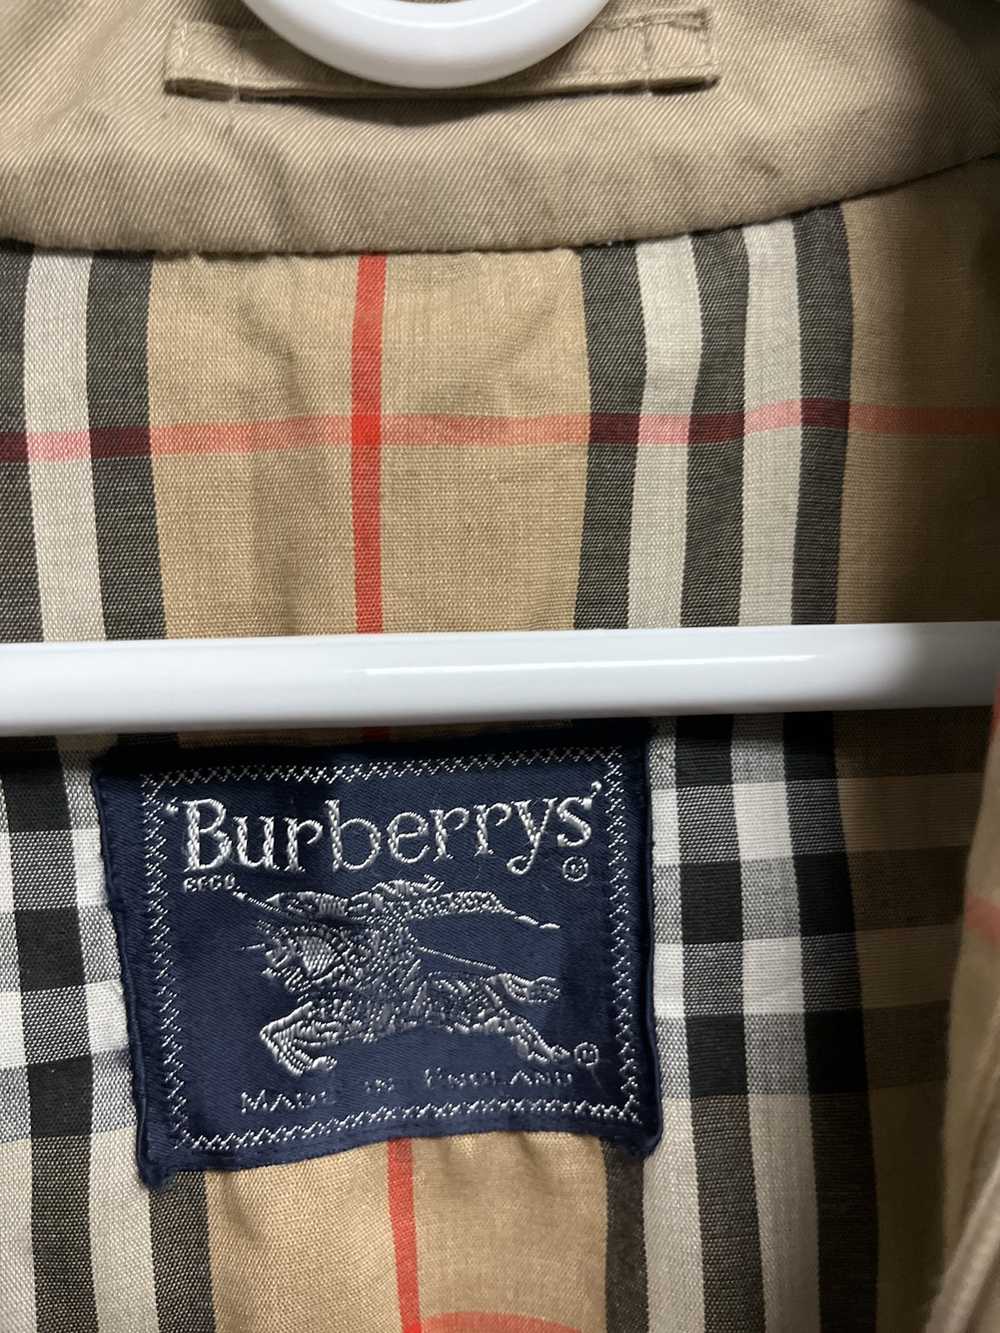 Burberry Vintage Burberry plaid zip up jacket - image 4